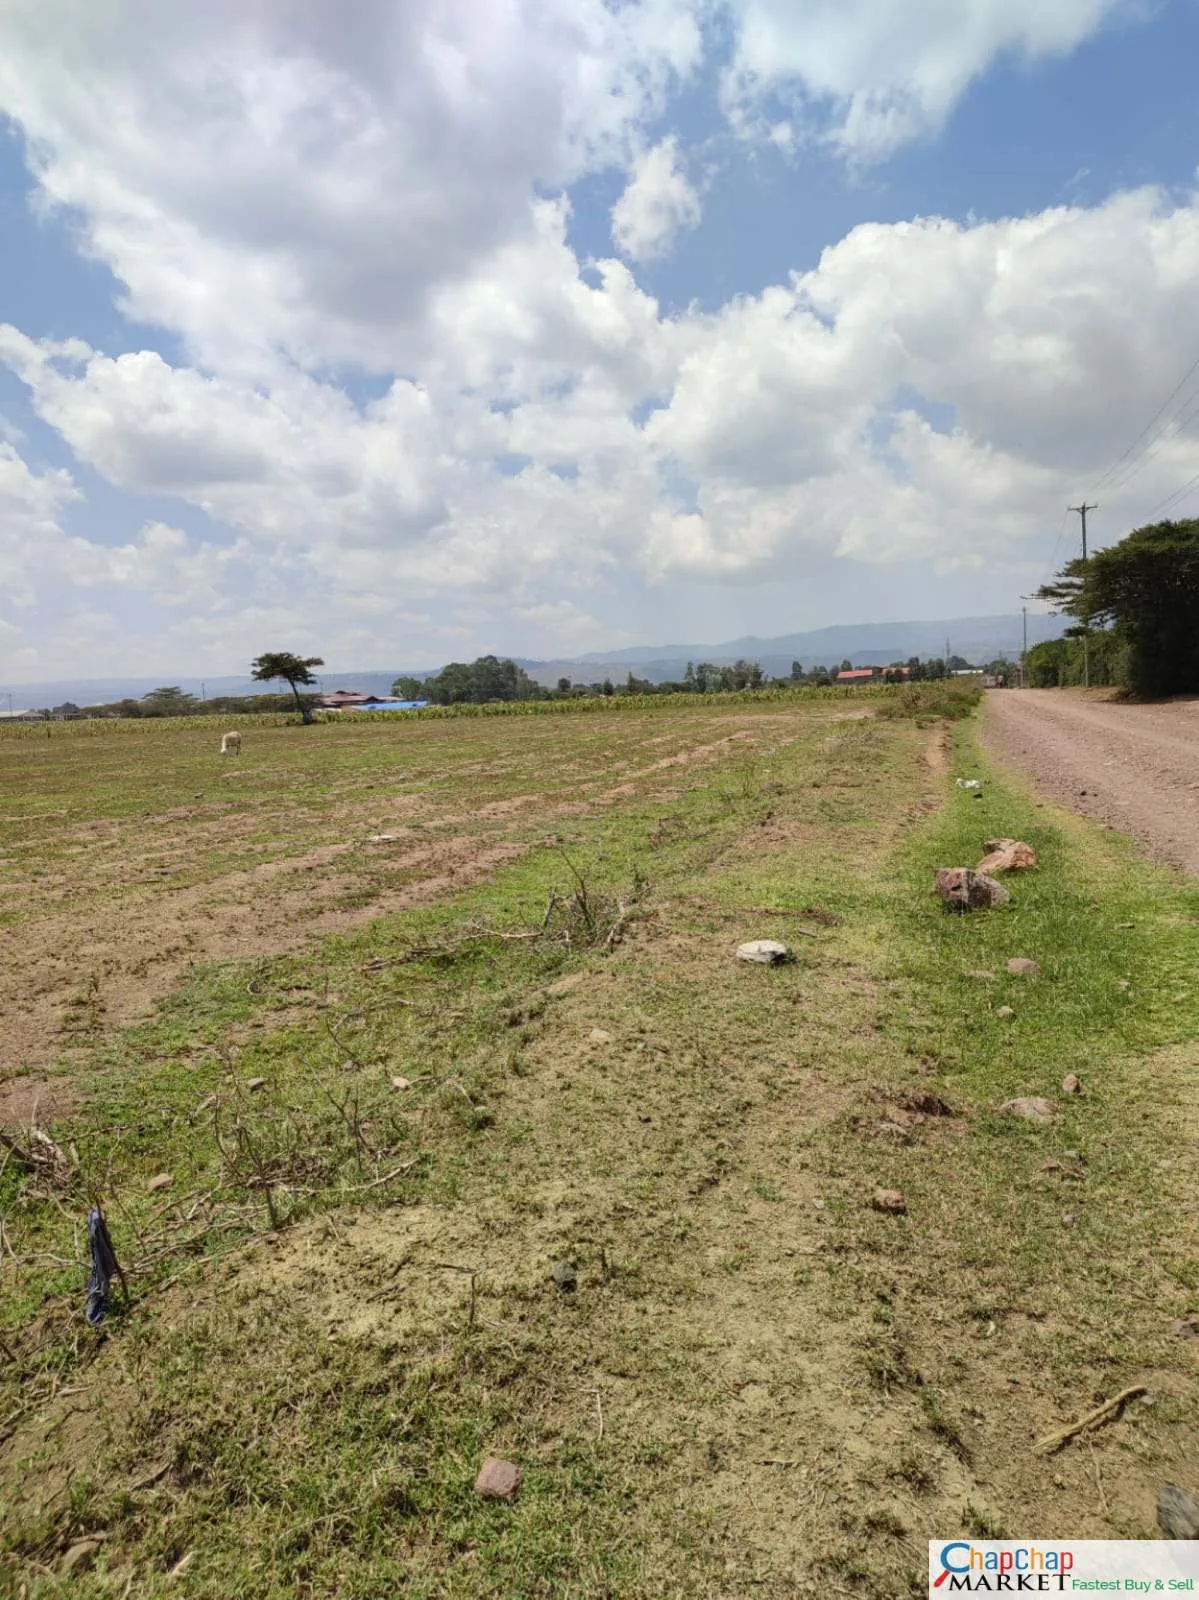 Land for Sale in Nakuru 3 acres for sale Eastgate Nakuru QUICK SALE Clean Title Deed